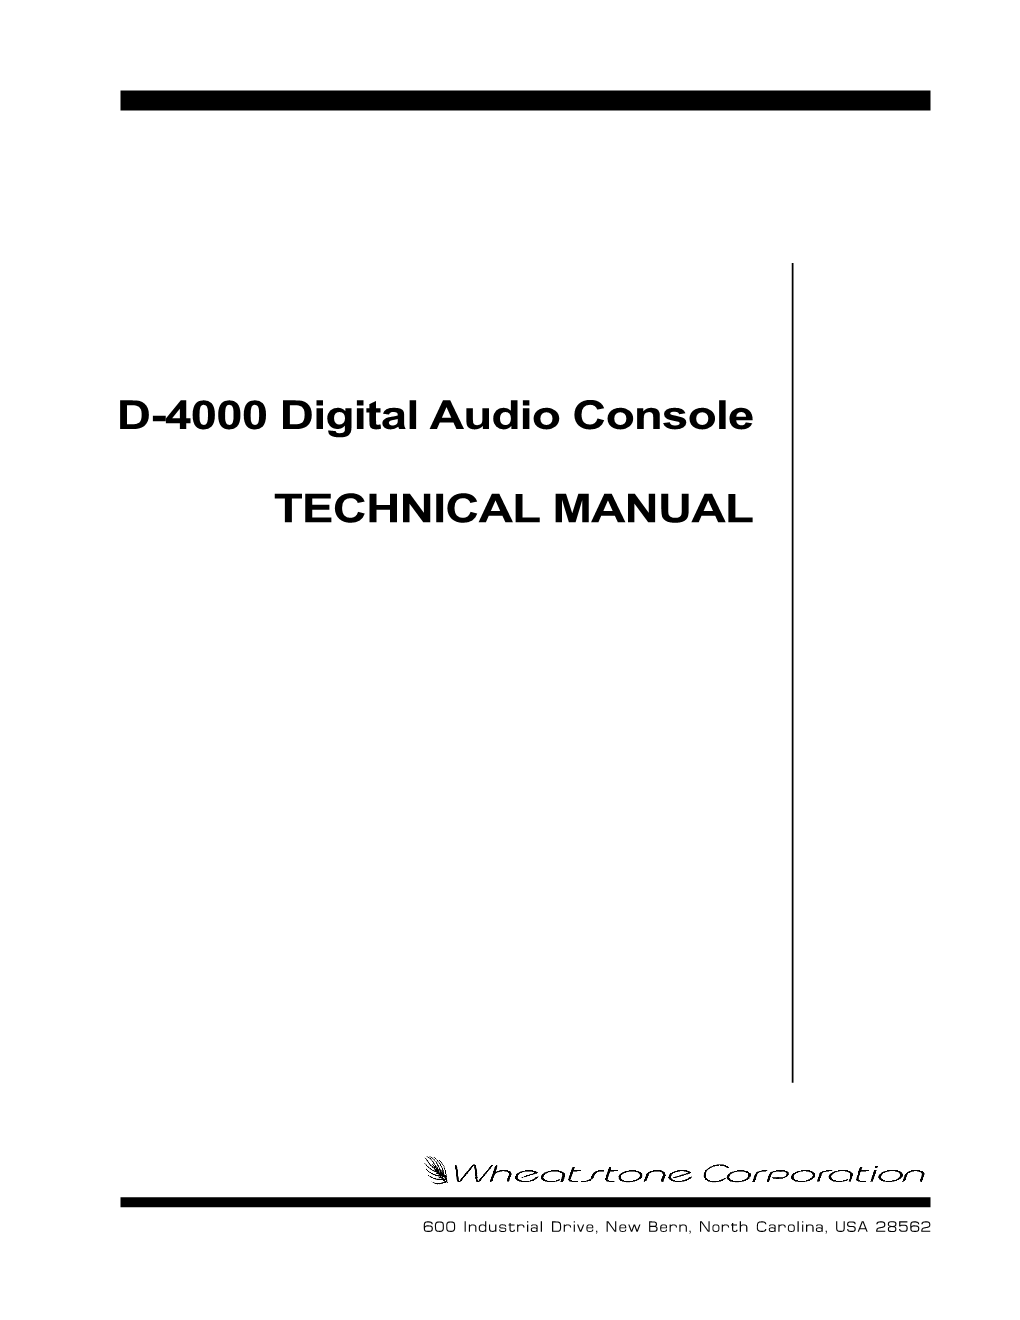 D-4000 Digital Audio Console Technical Manual - 1St Edition